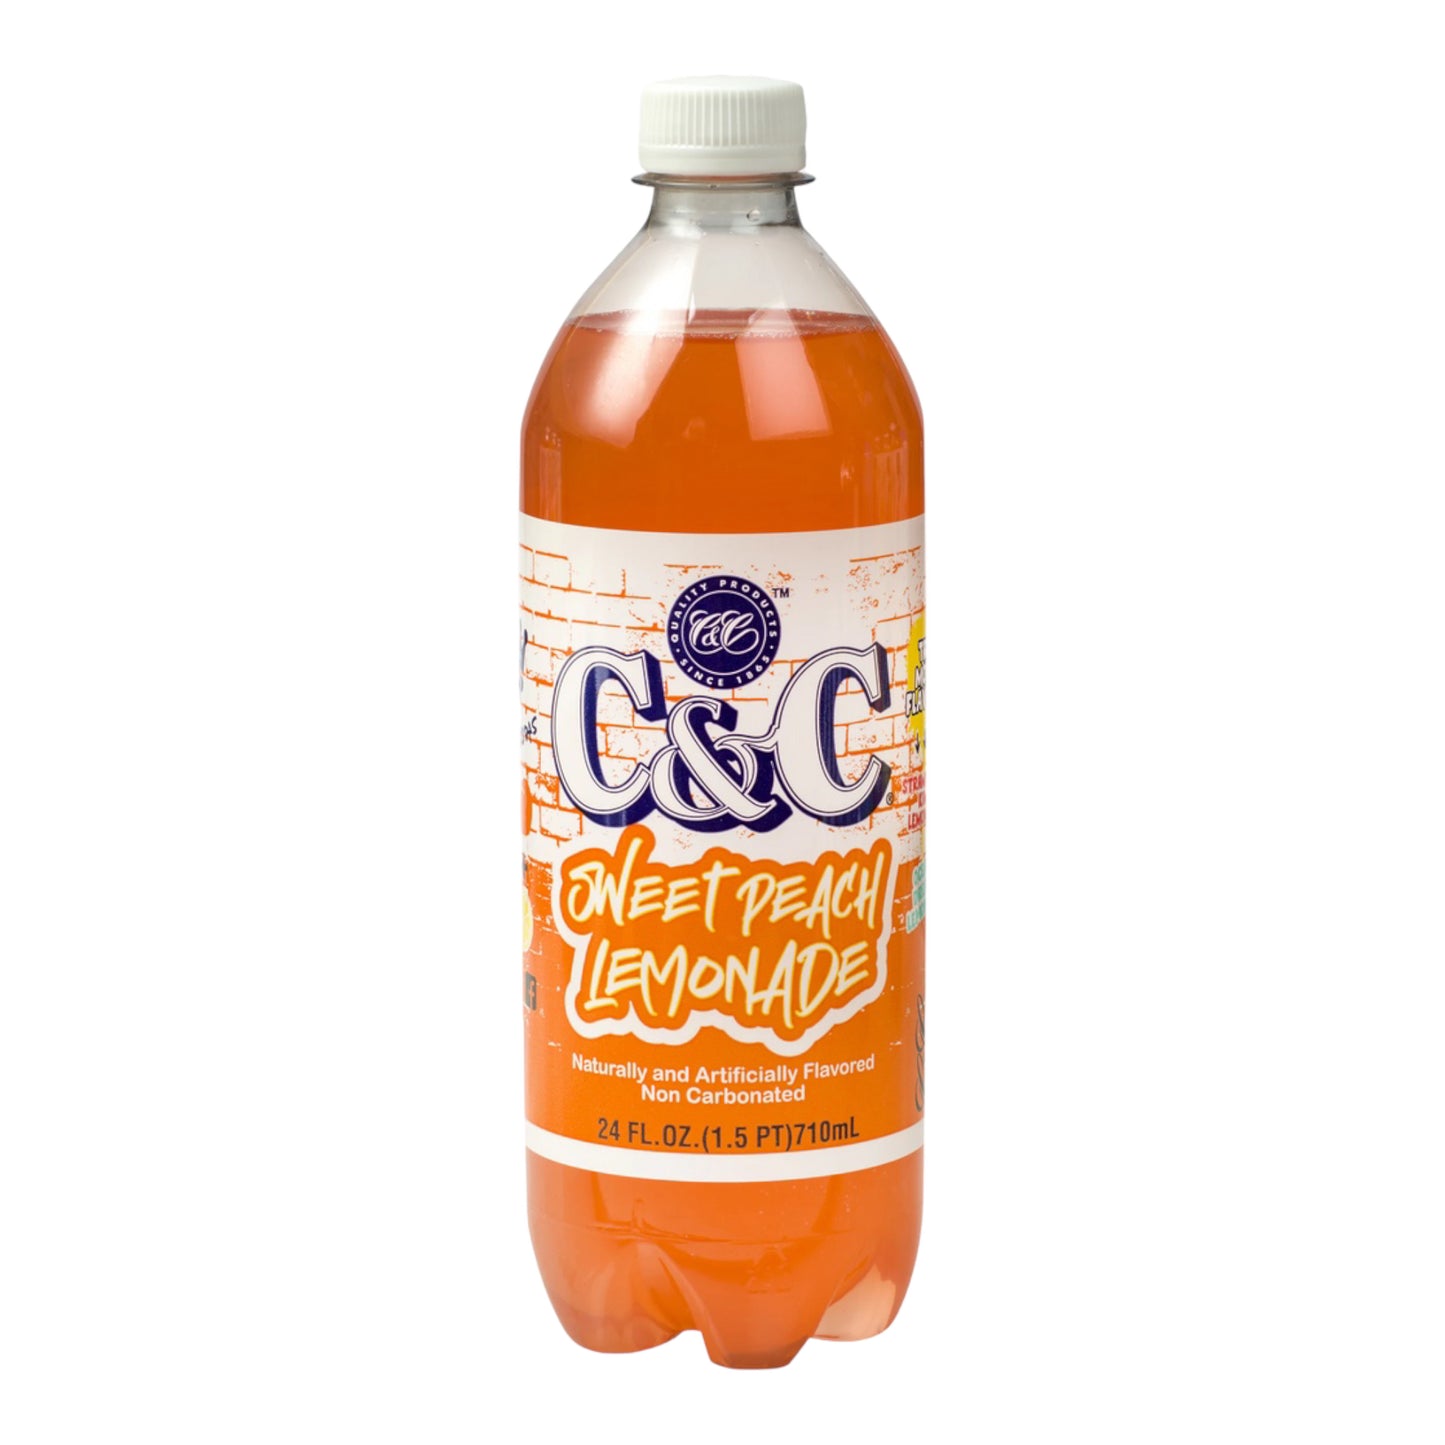 C&C Soda Sweet Peach Lemonade Bottle 24 fl oz (710ml)